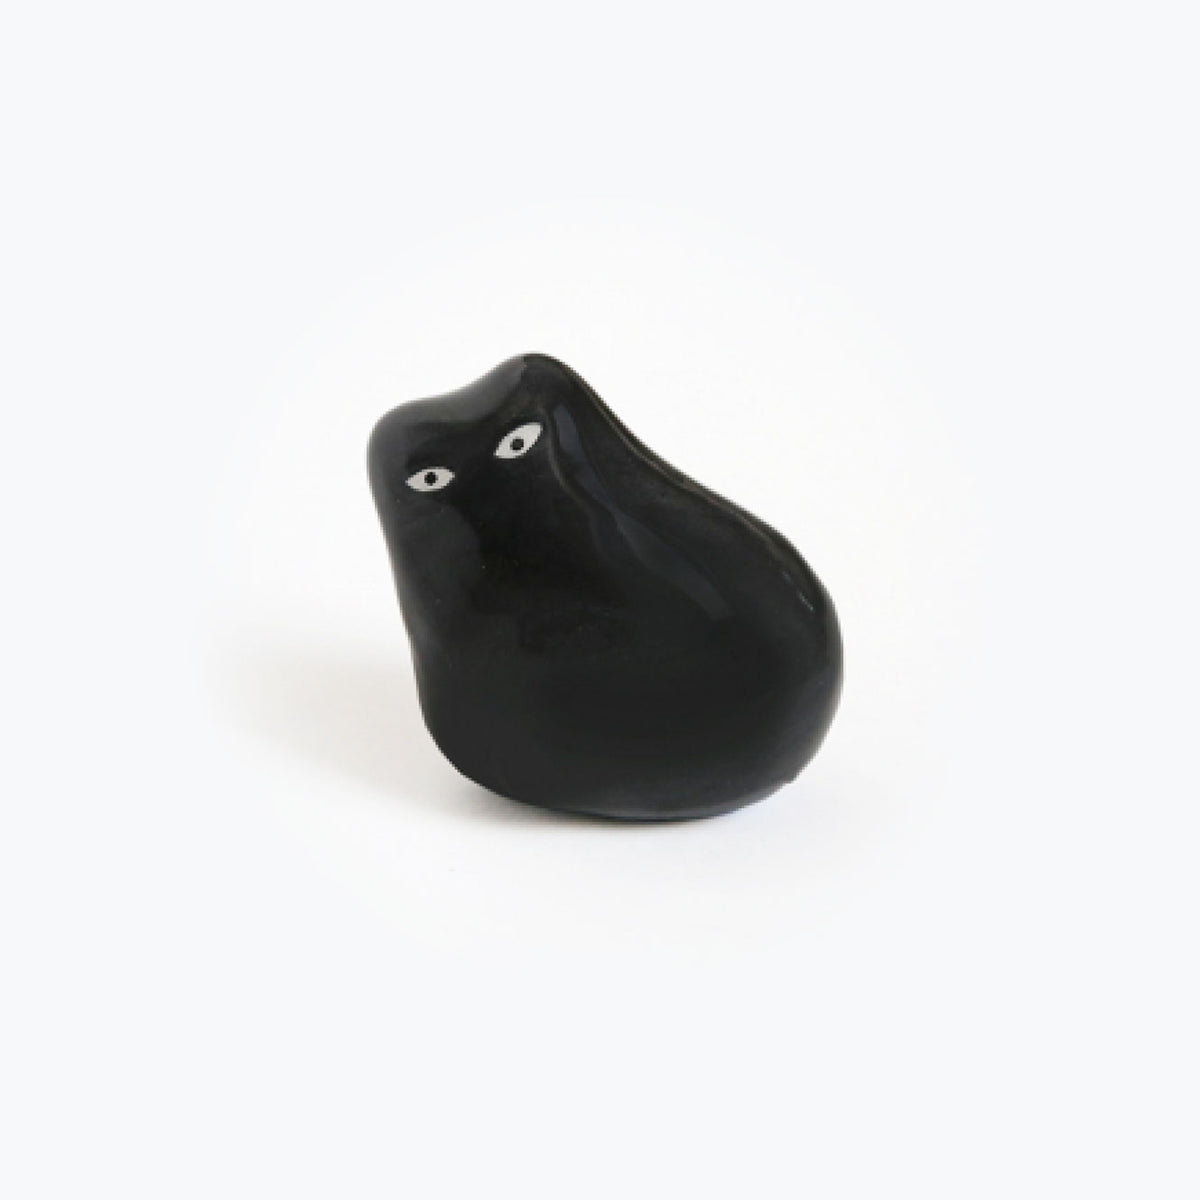 Dodo Toucan - Charm - Ceramic Sculpture - Daydreamer Cat